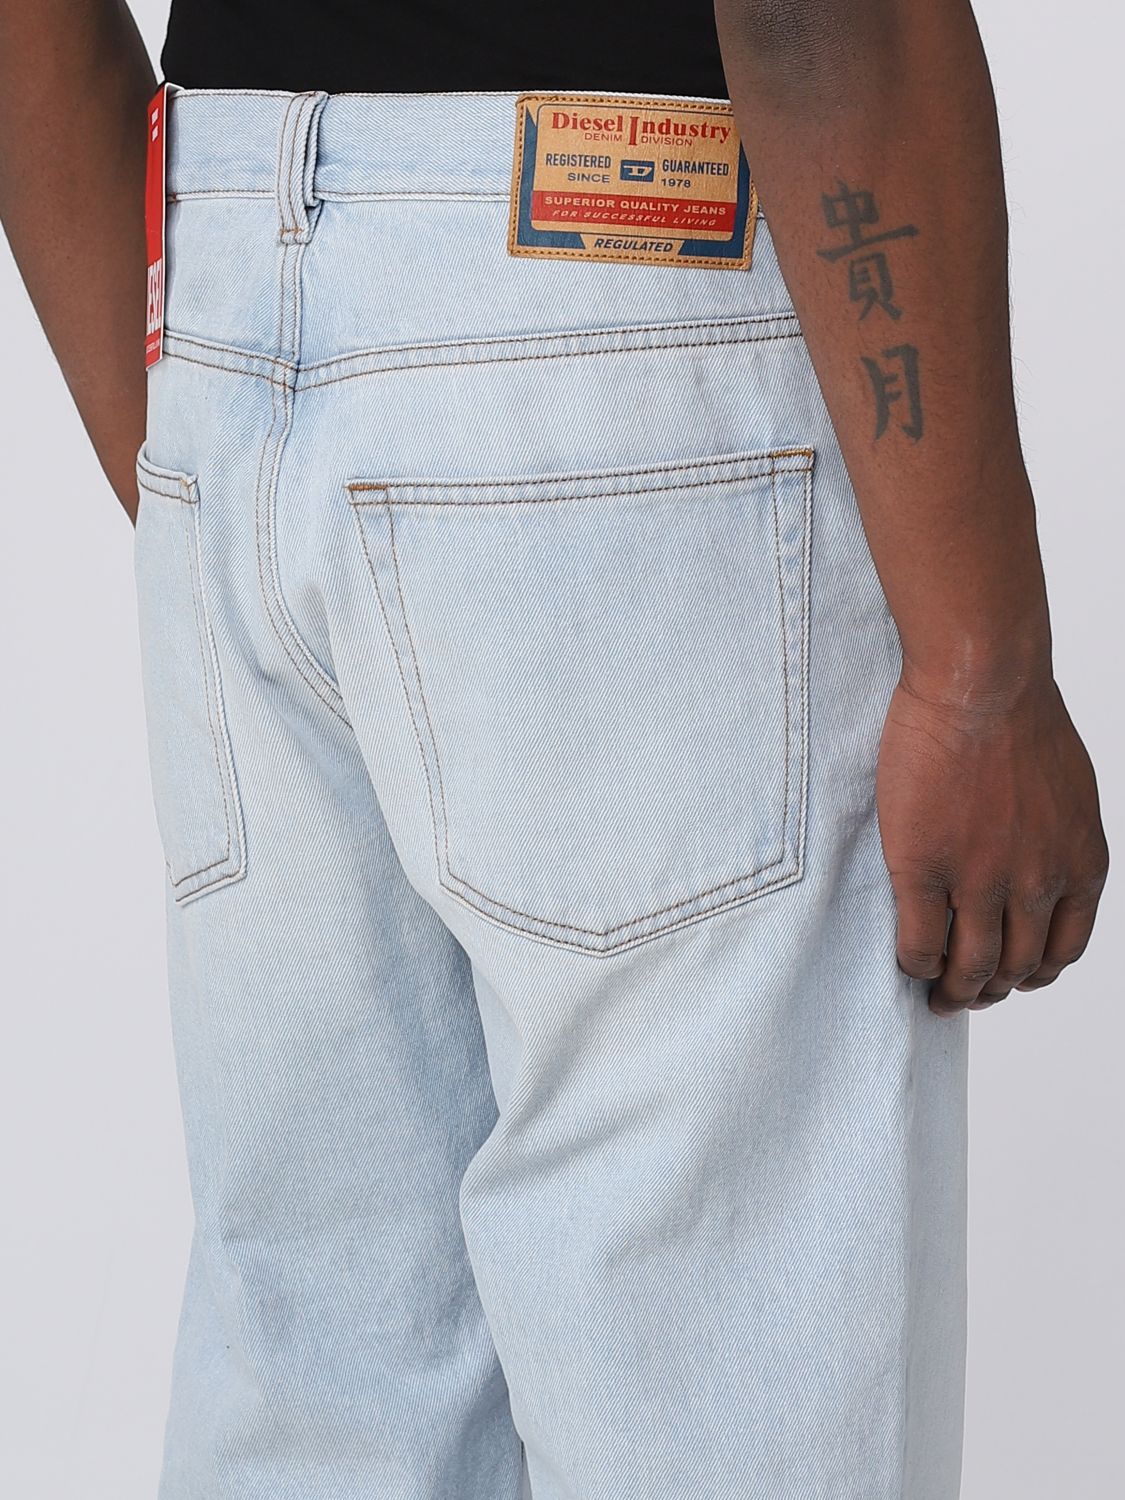 DIESEL: for man - Denim | Diesel jeans A04149007L4 online on GIGLIO.COM